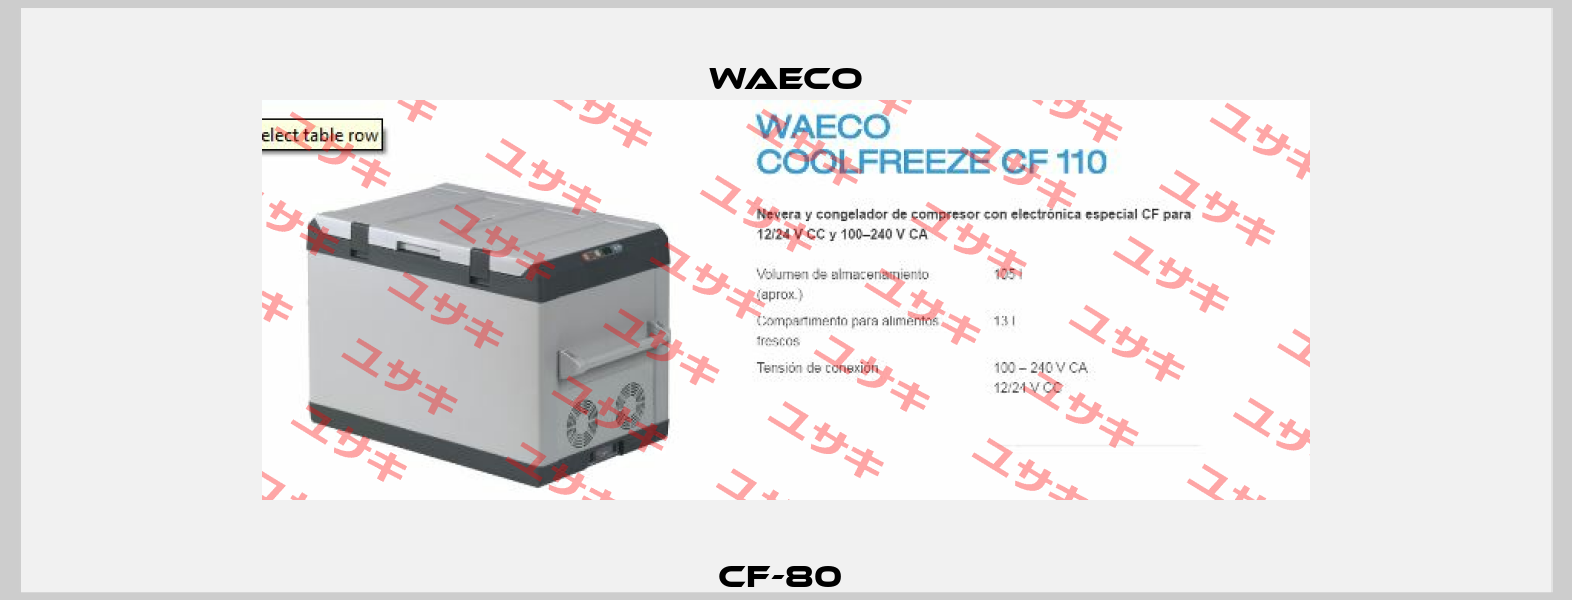 CF-80  Waeco